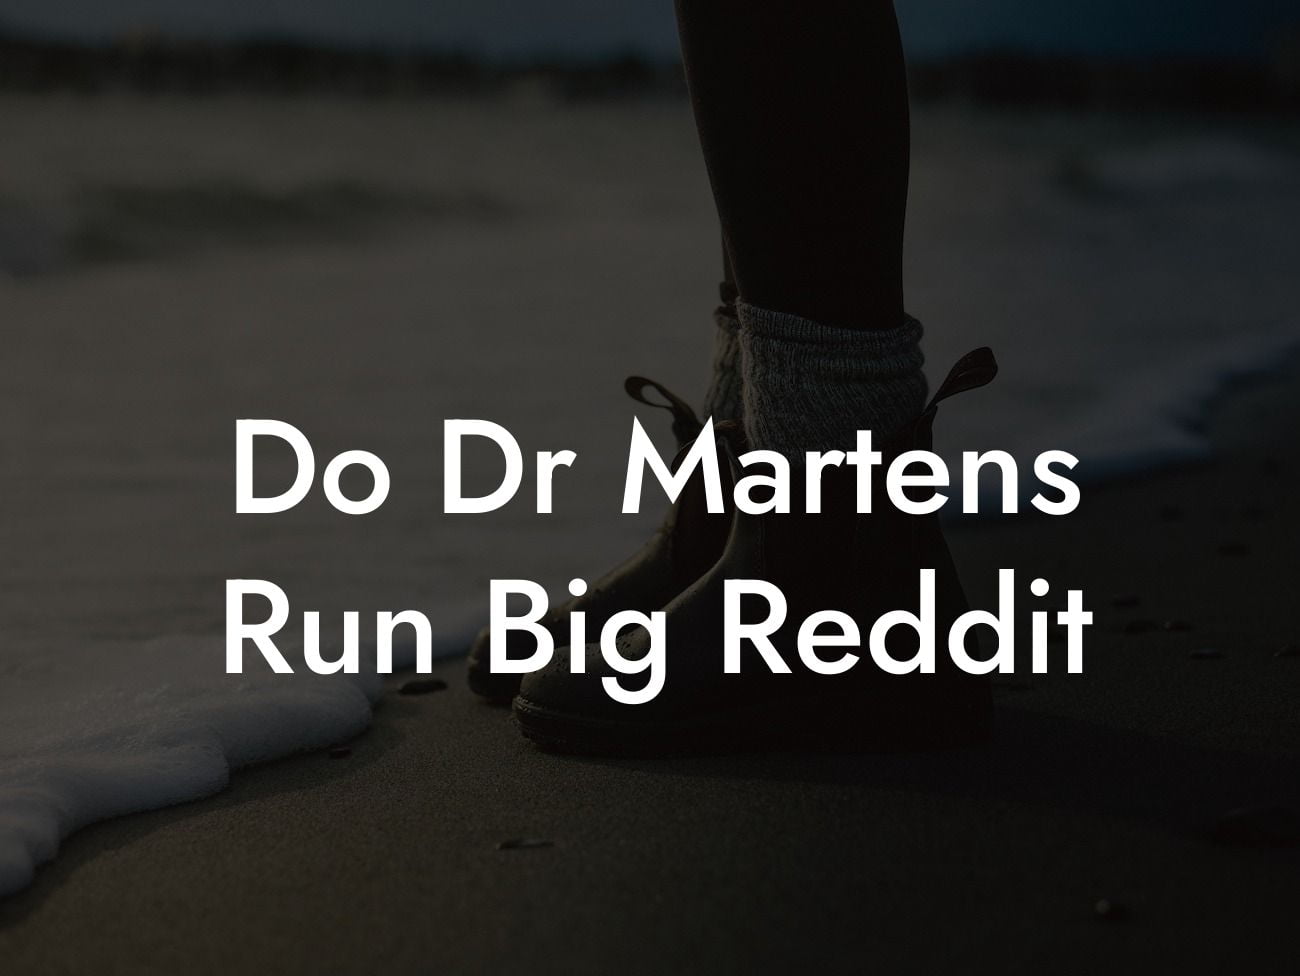 Do Dr Martens Run Big Reddit